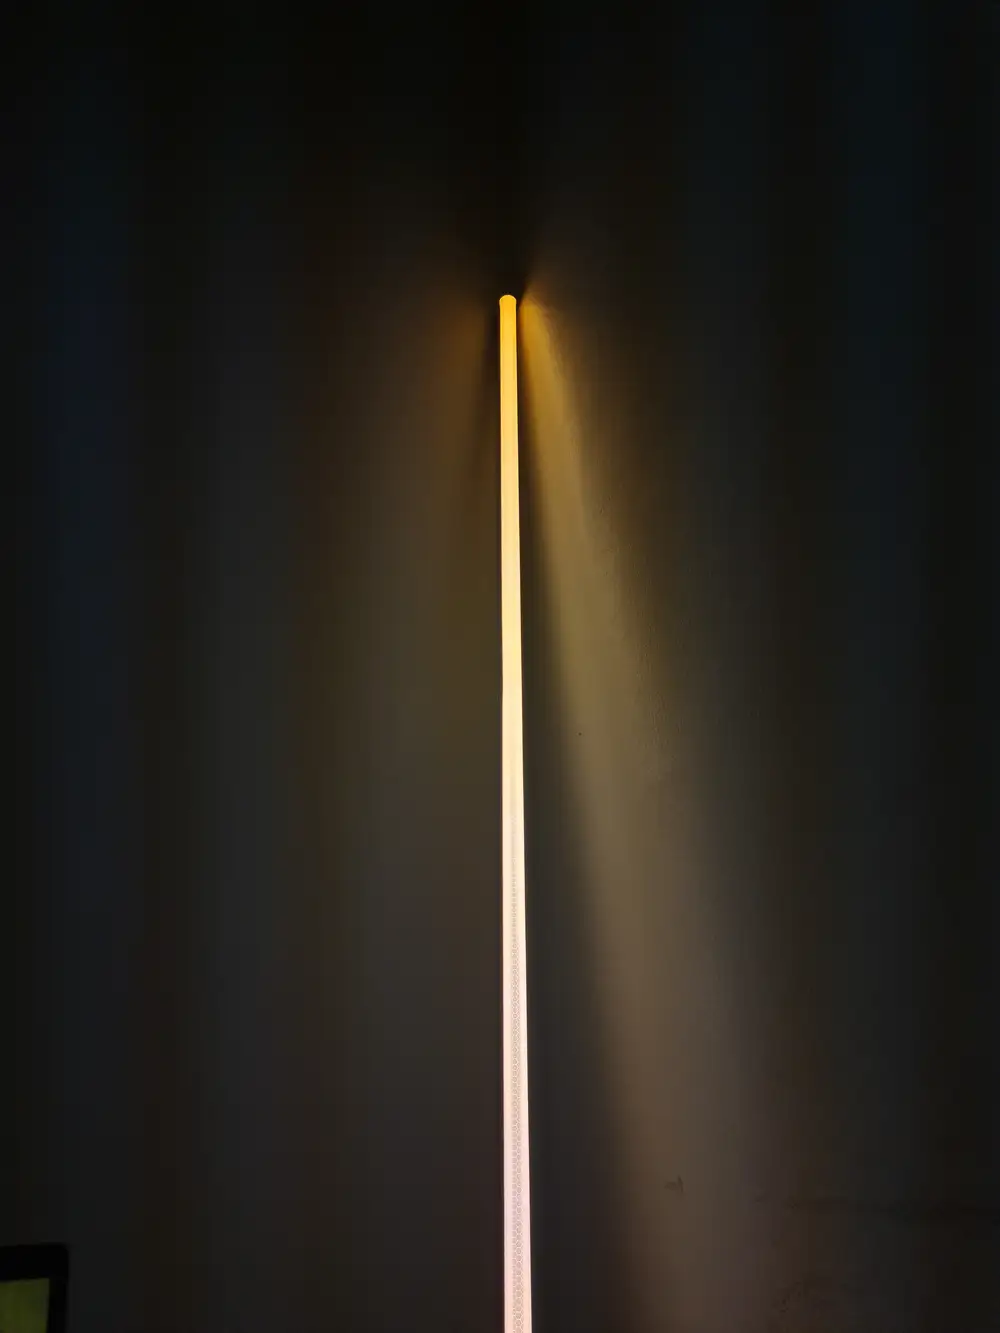 A lighting pole